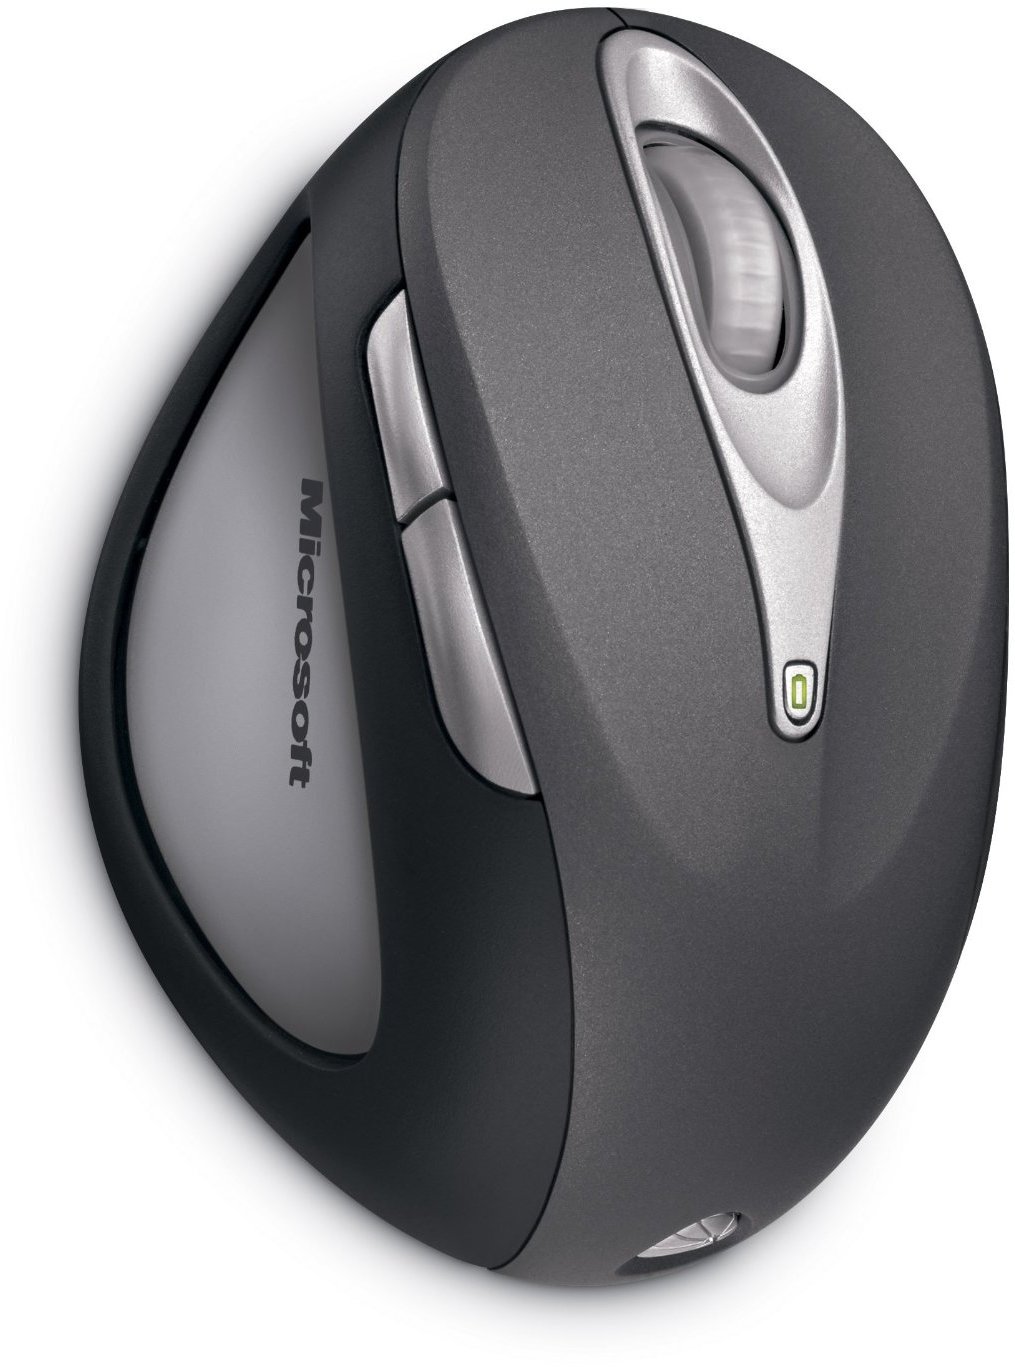 microsoft sculpt ergonomic mouse mac driver